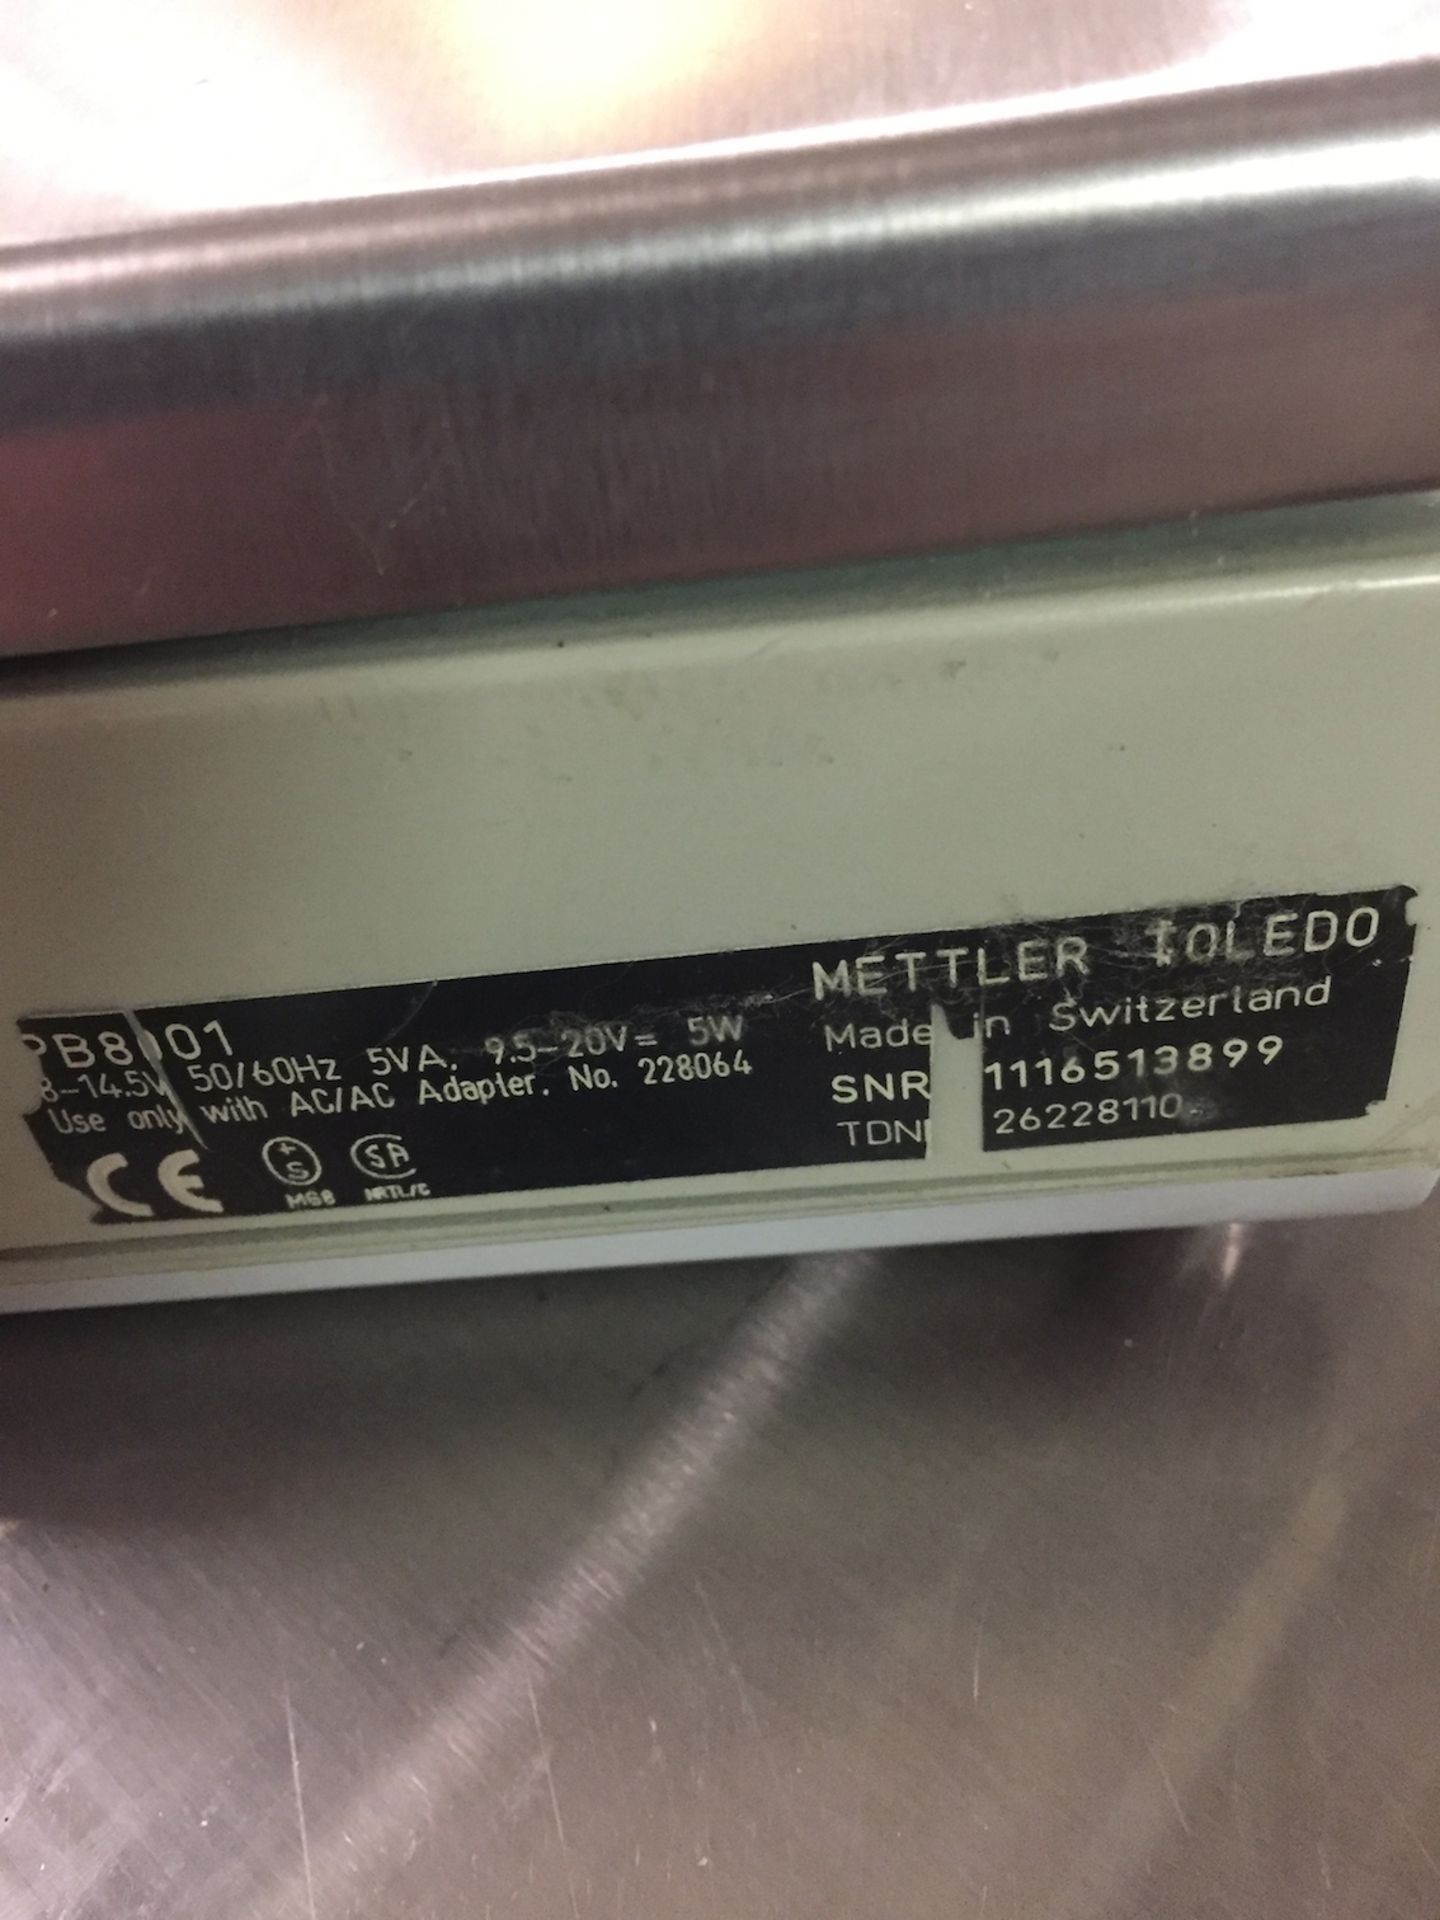 Mettler Toledo Scale PB8001, SNR 1116513899 - Image 2 of 3